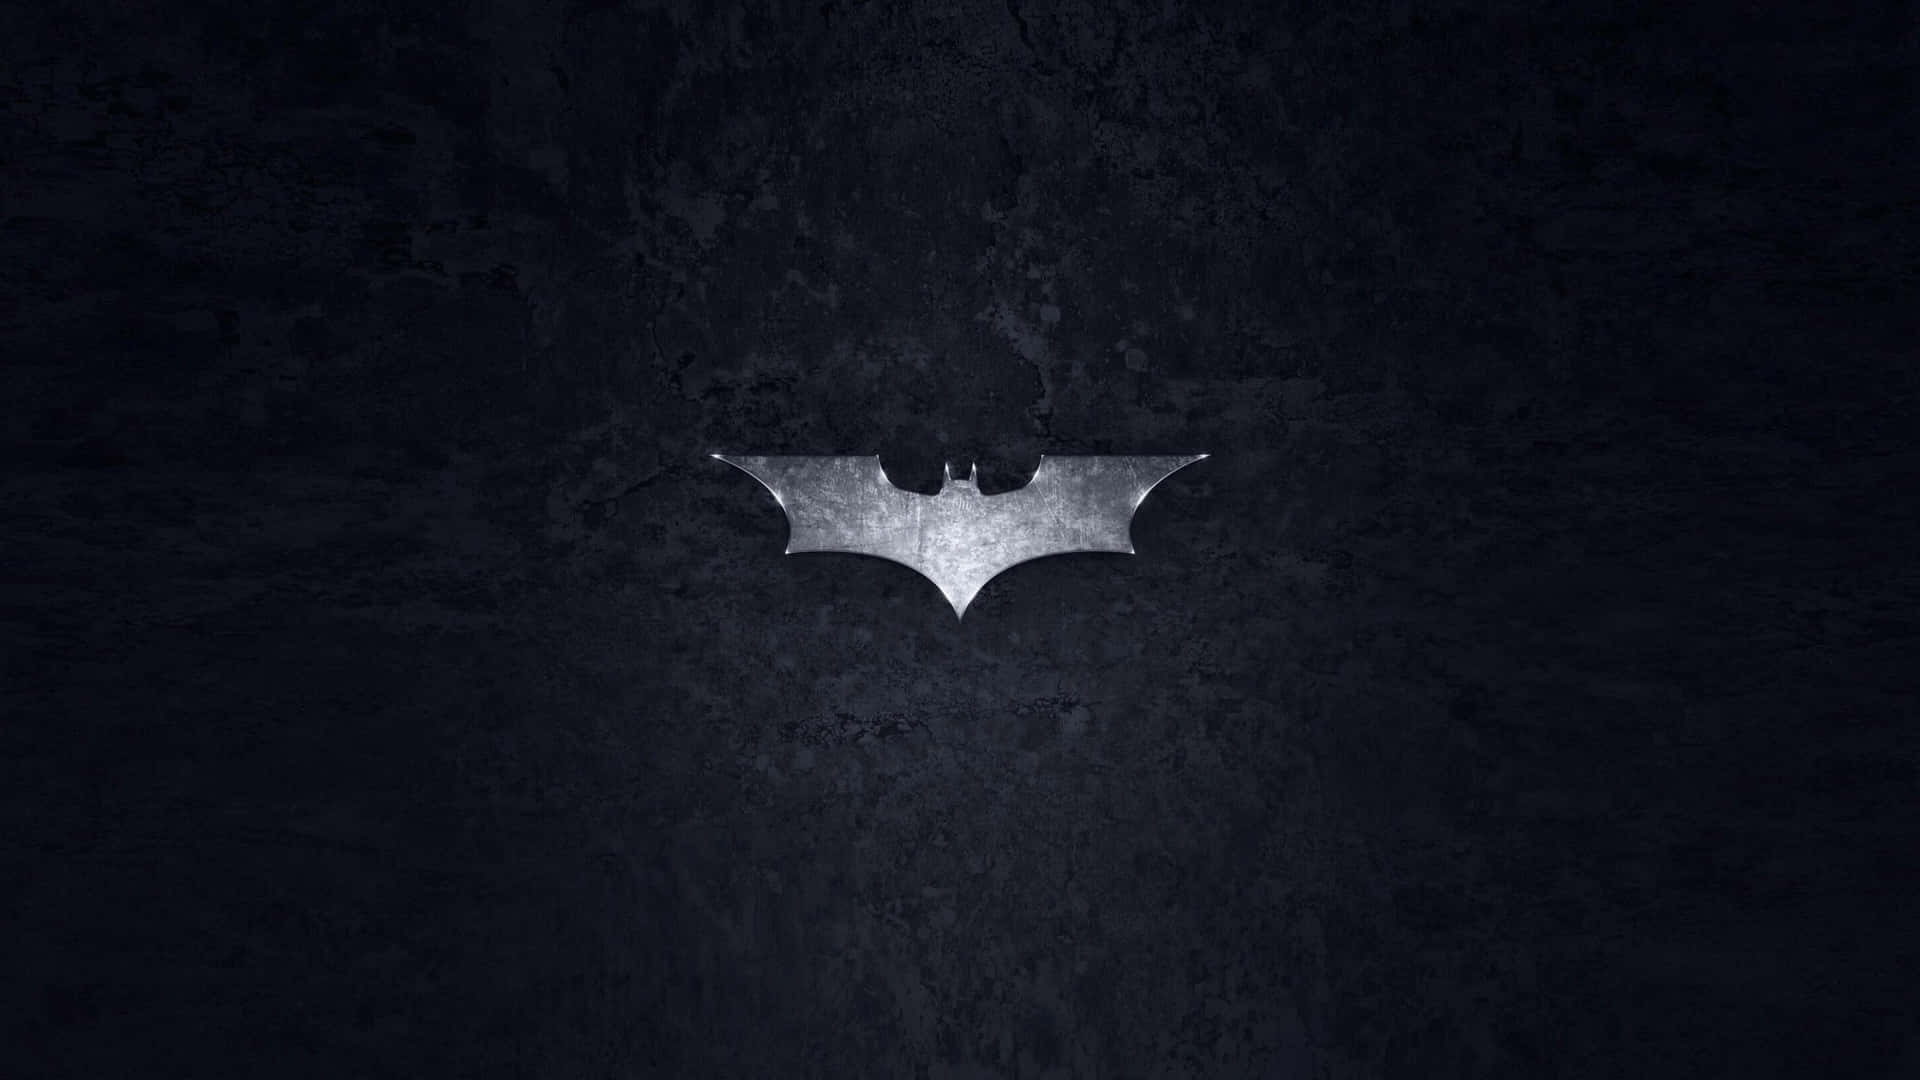 "Batman in a Dark Alley" Wallpaper